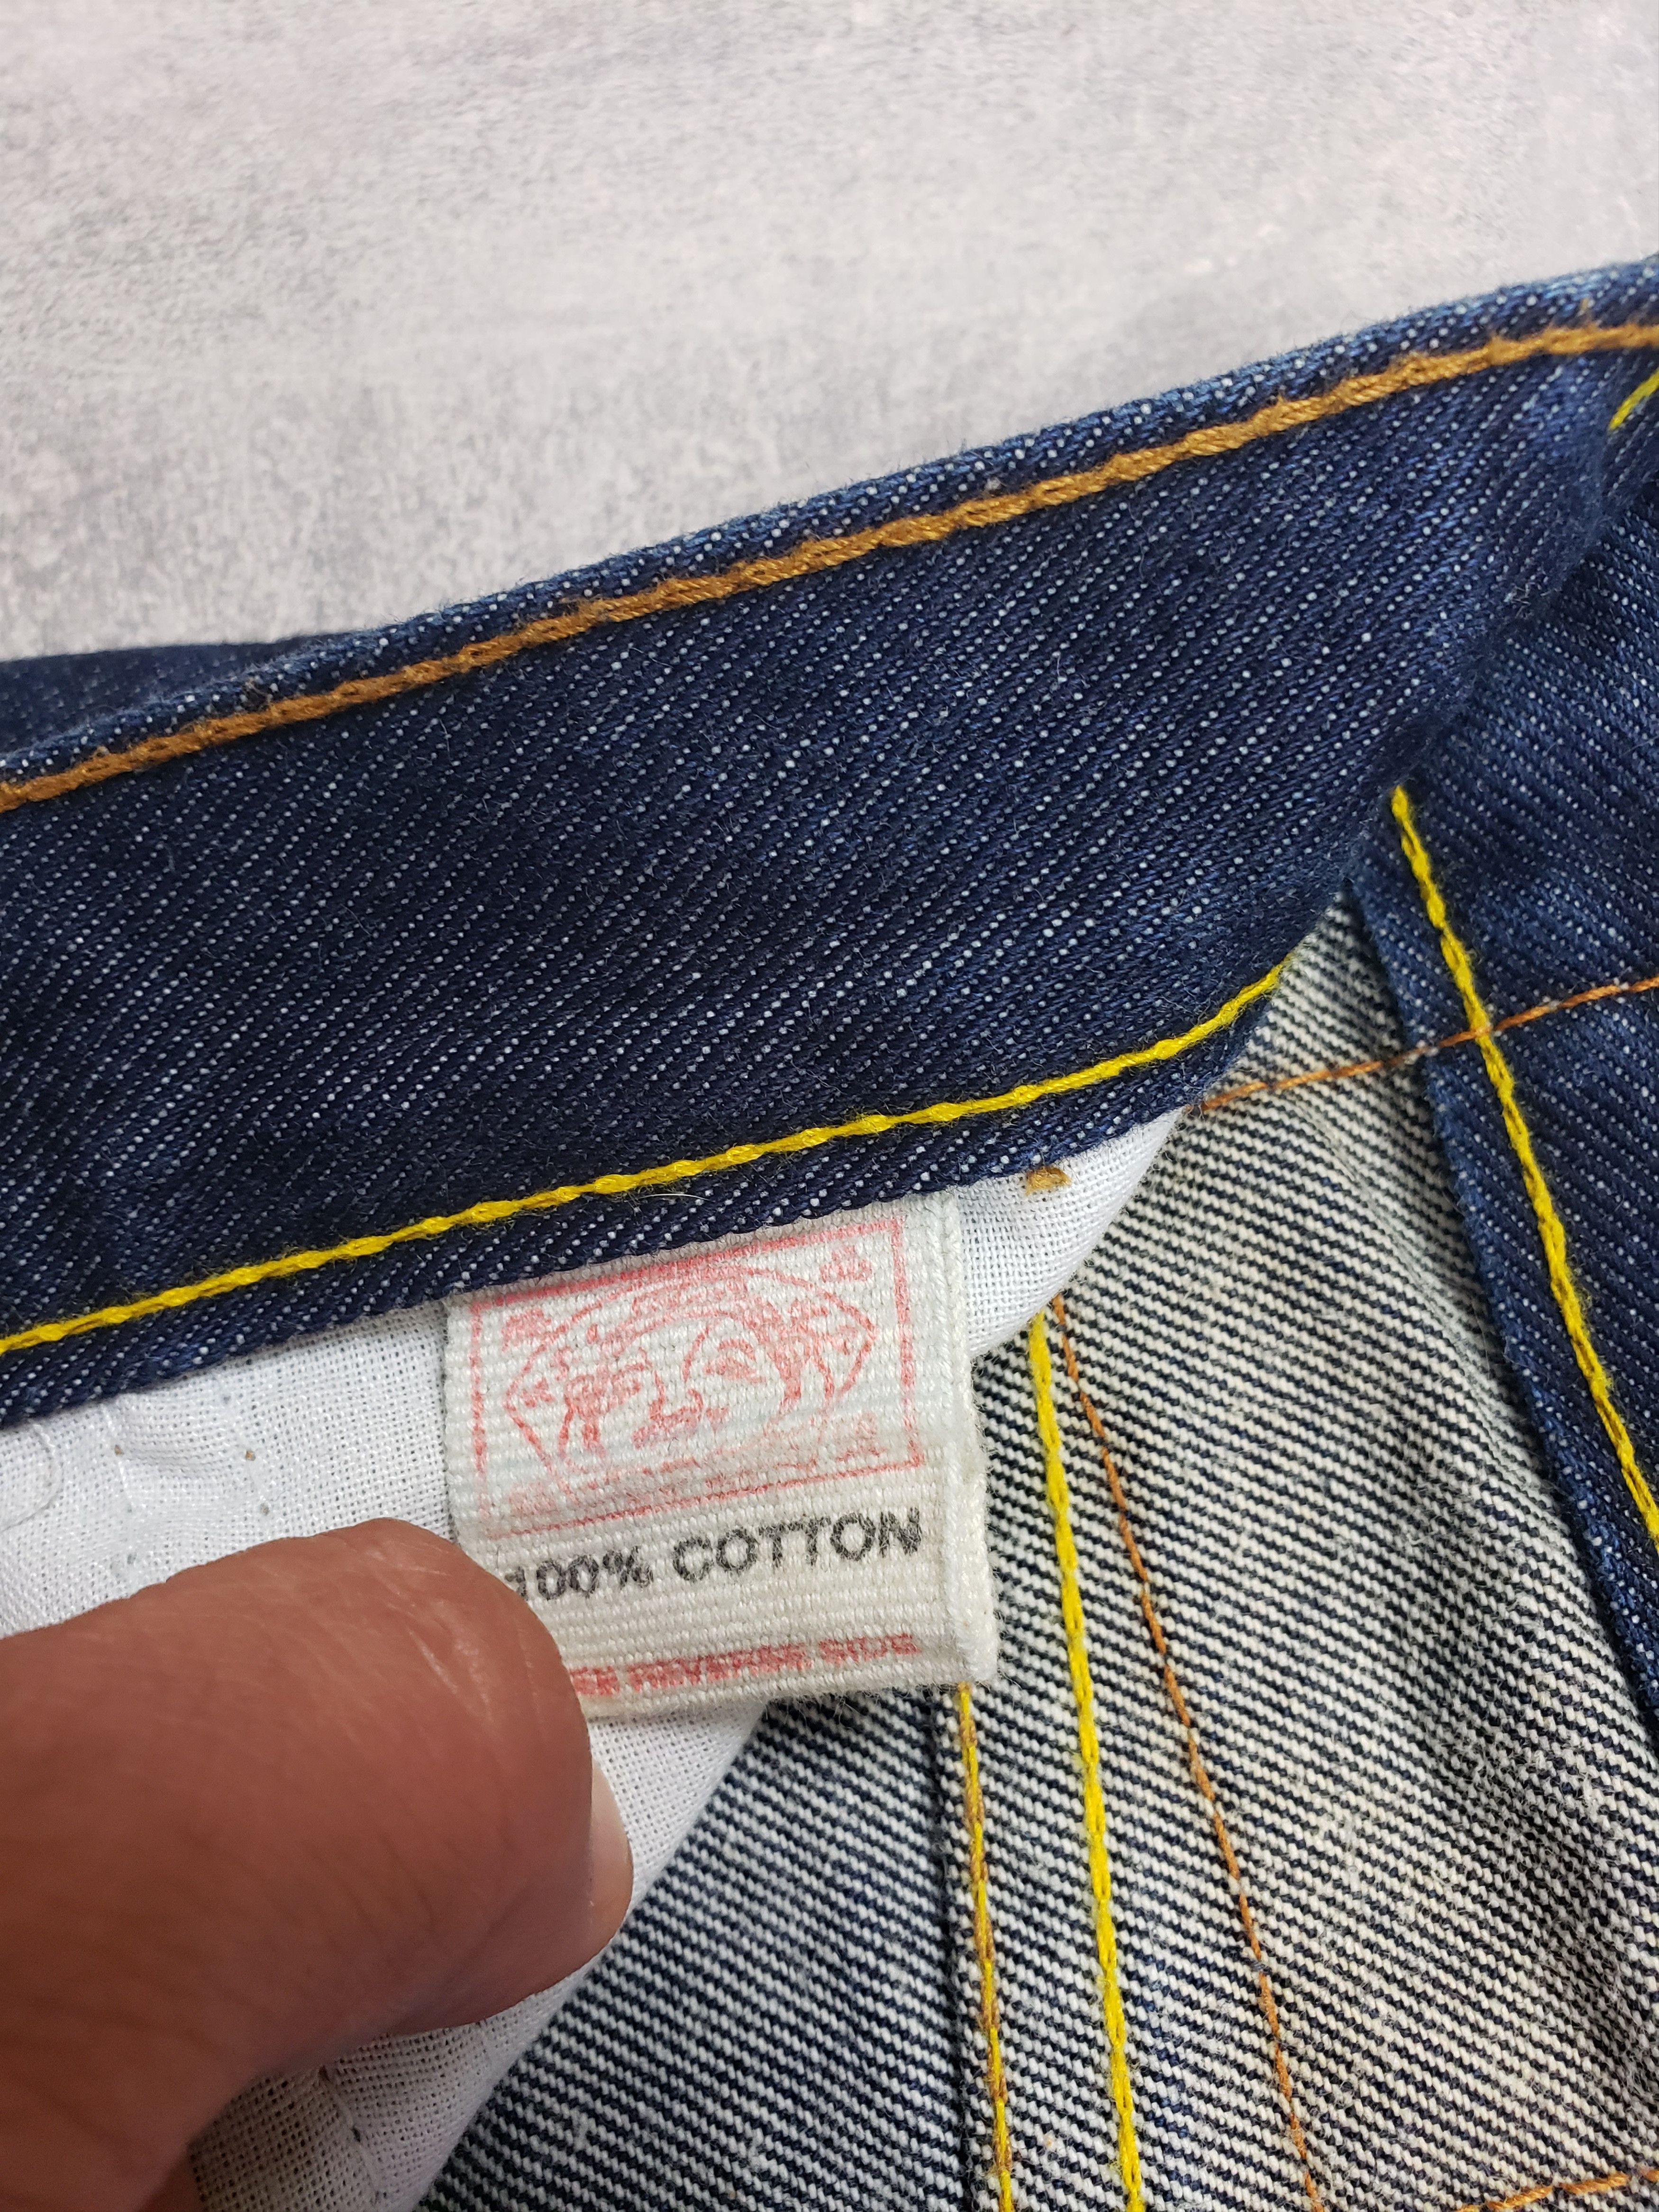 Evisu Evisu denim pants big logo jeans selvedge Size US 34 / EU 50 - 9 Thumbnail